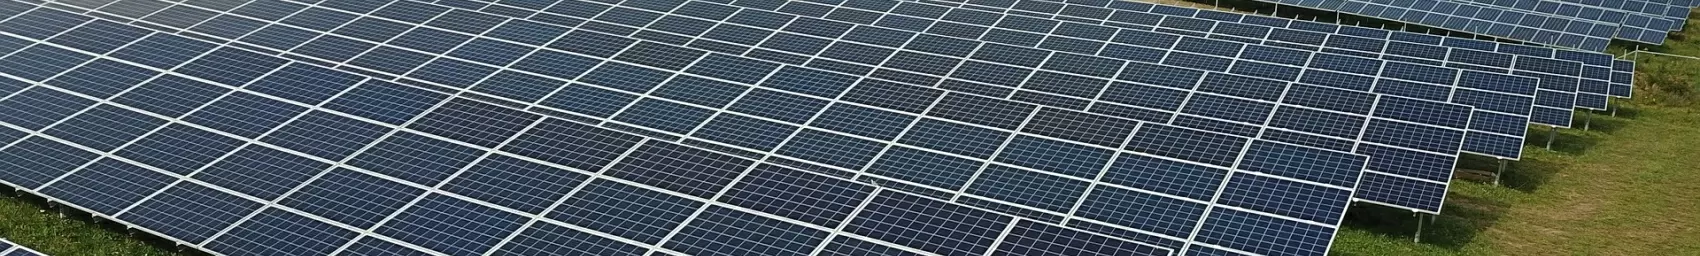 Painéis fotovoltaicos de energia solar